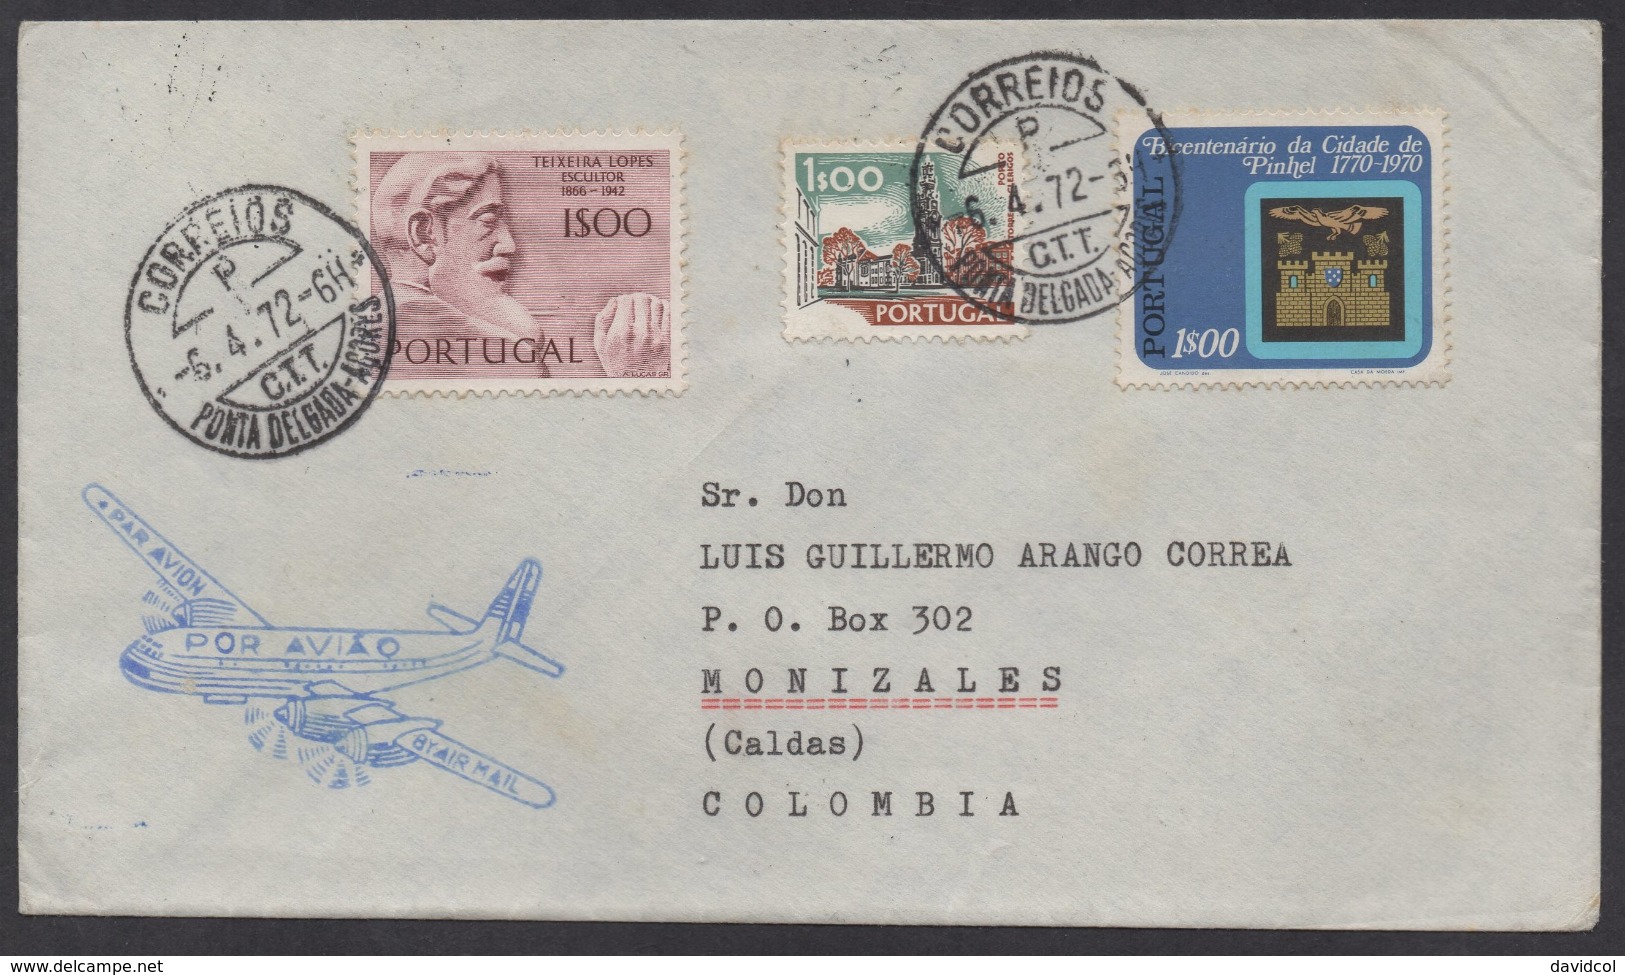 SA184- PORTUGAL-AZORES - 1972 - PONTA DELGADA 6-4-72 TO MANIZALES-CALDAS-COLOMBIA 12-IV-72 - Africa Portuguesa